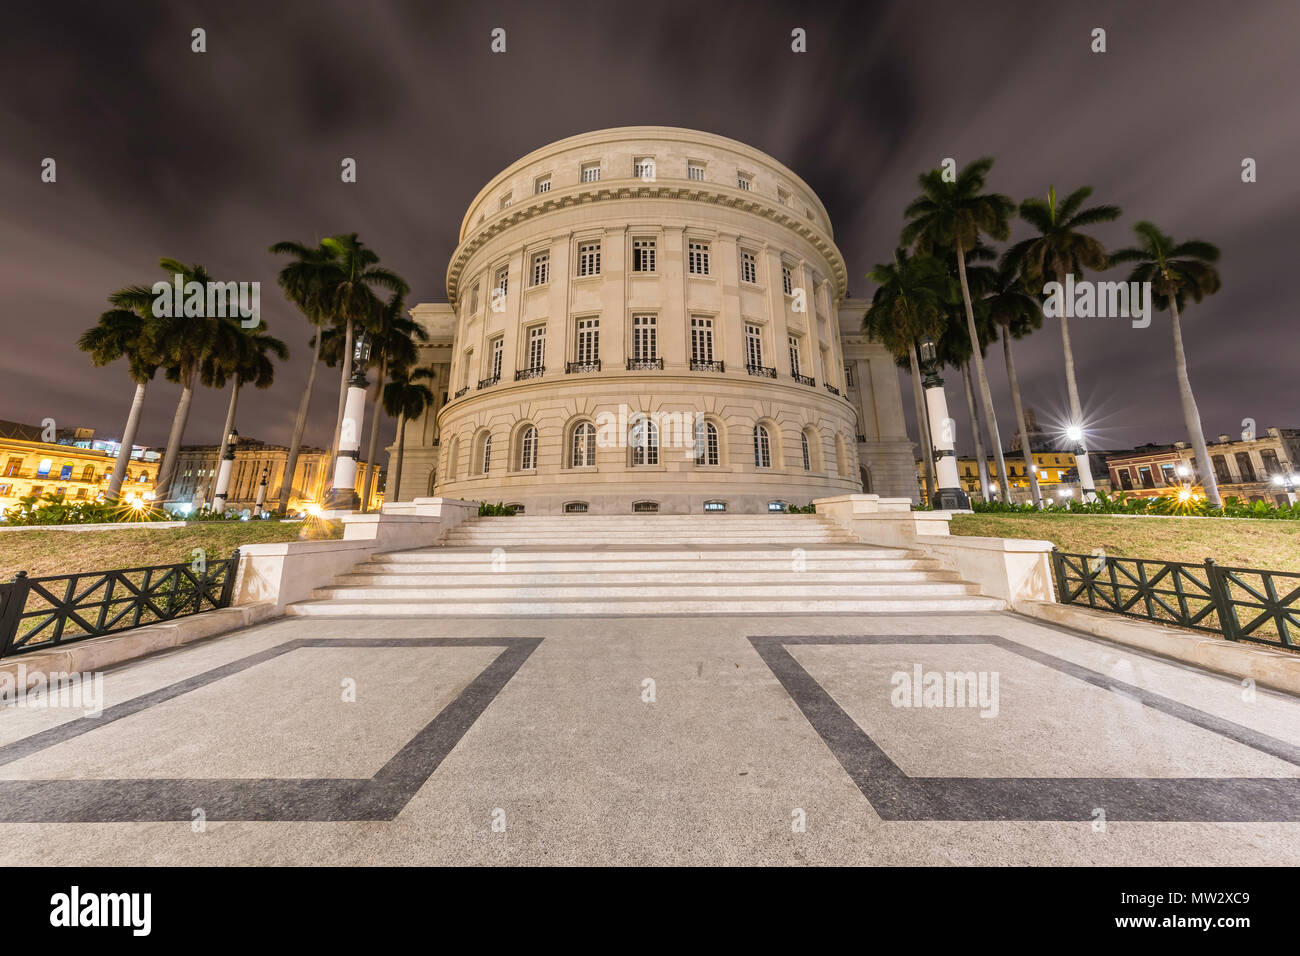 The Cuban Capitol building at night, El Capitolio, downtown Havana, Cuba. Stock Photo